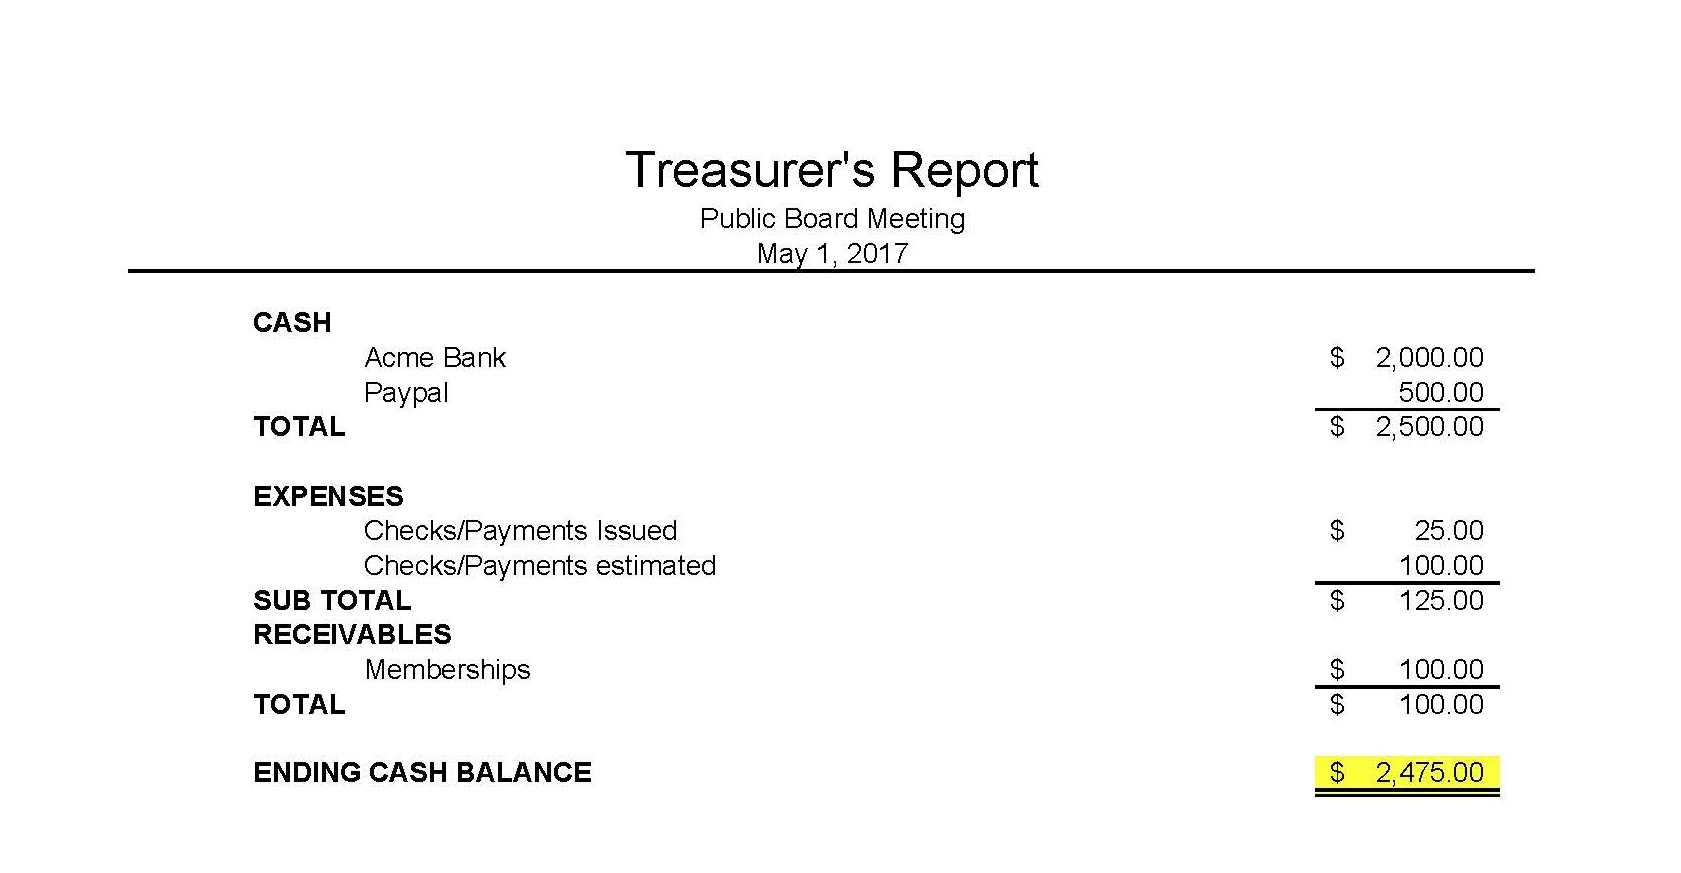 009 Treasurer Report Template Non Profit Sample Club Pertaining To Non Profit Treasurer Report Template